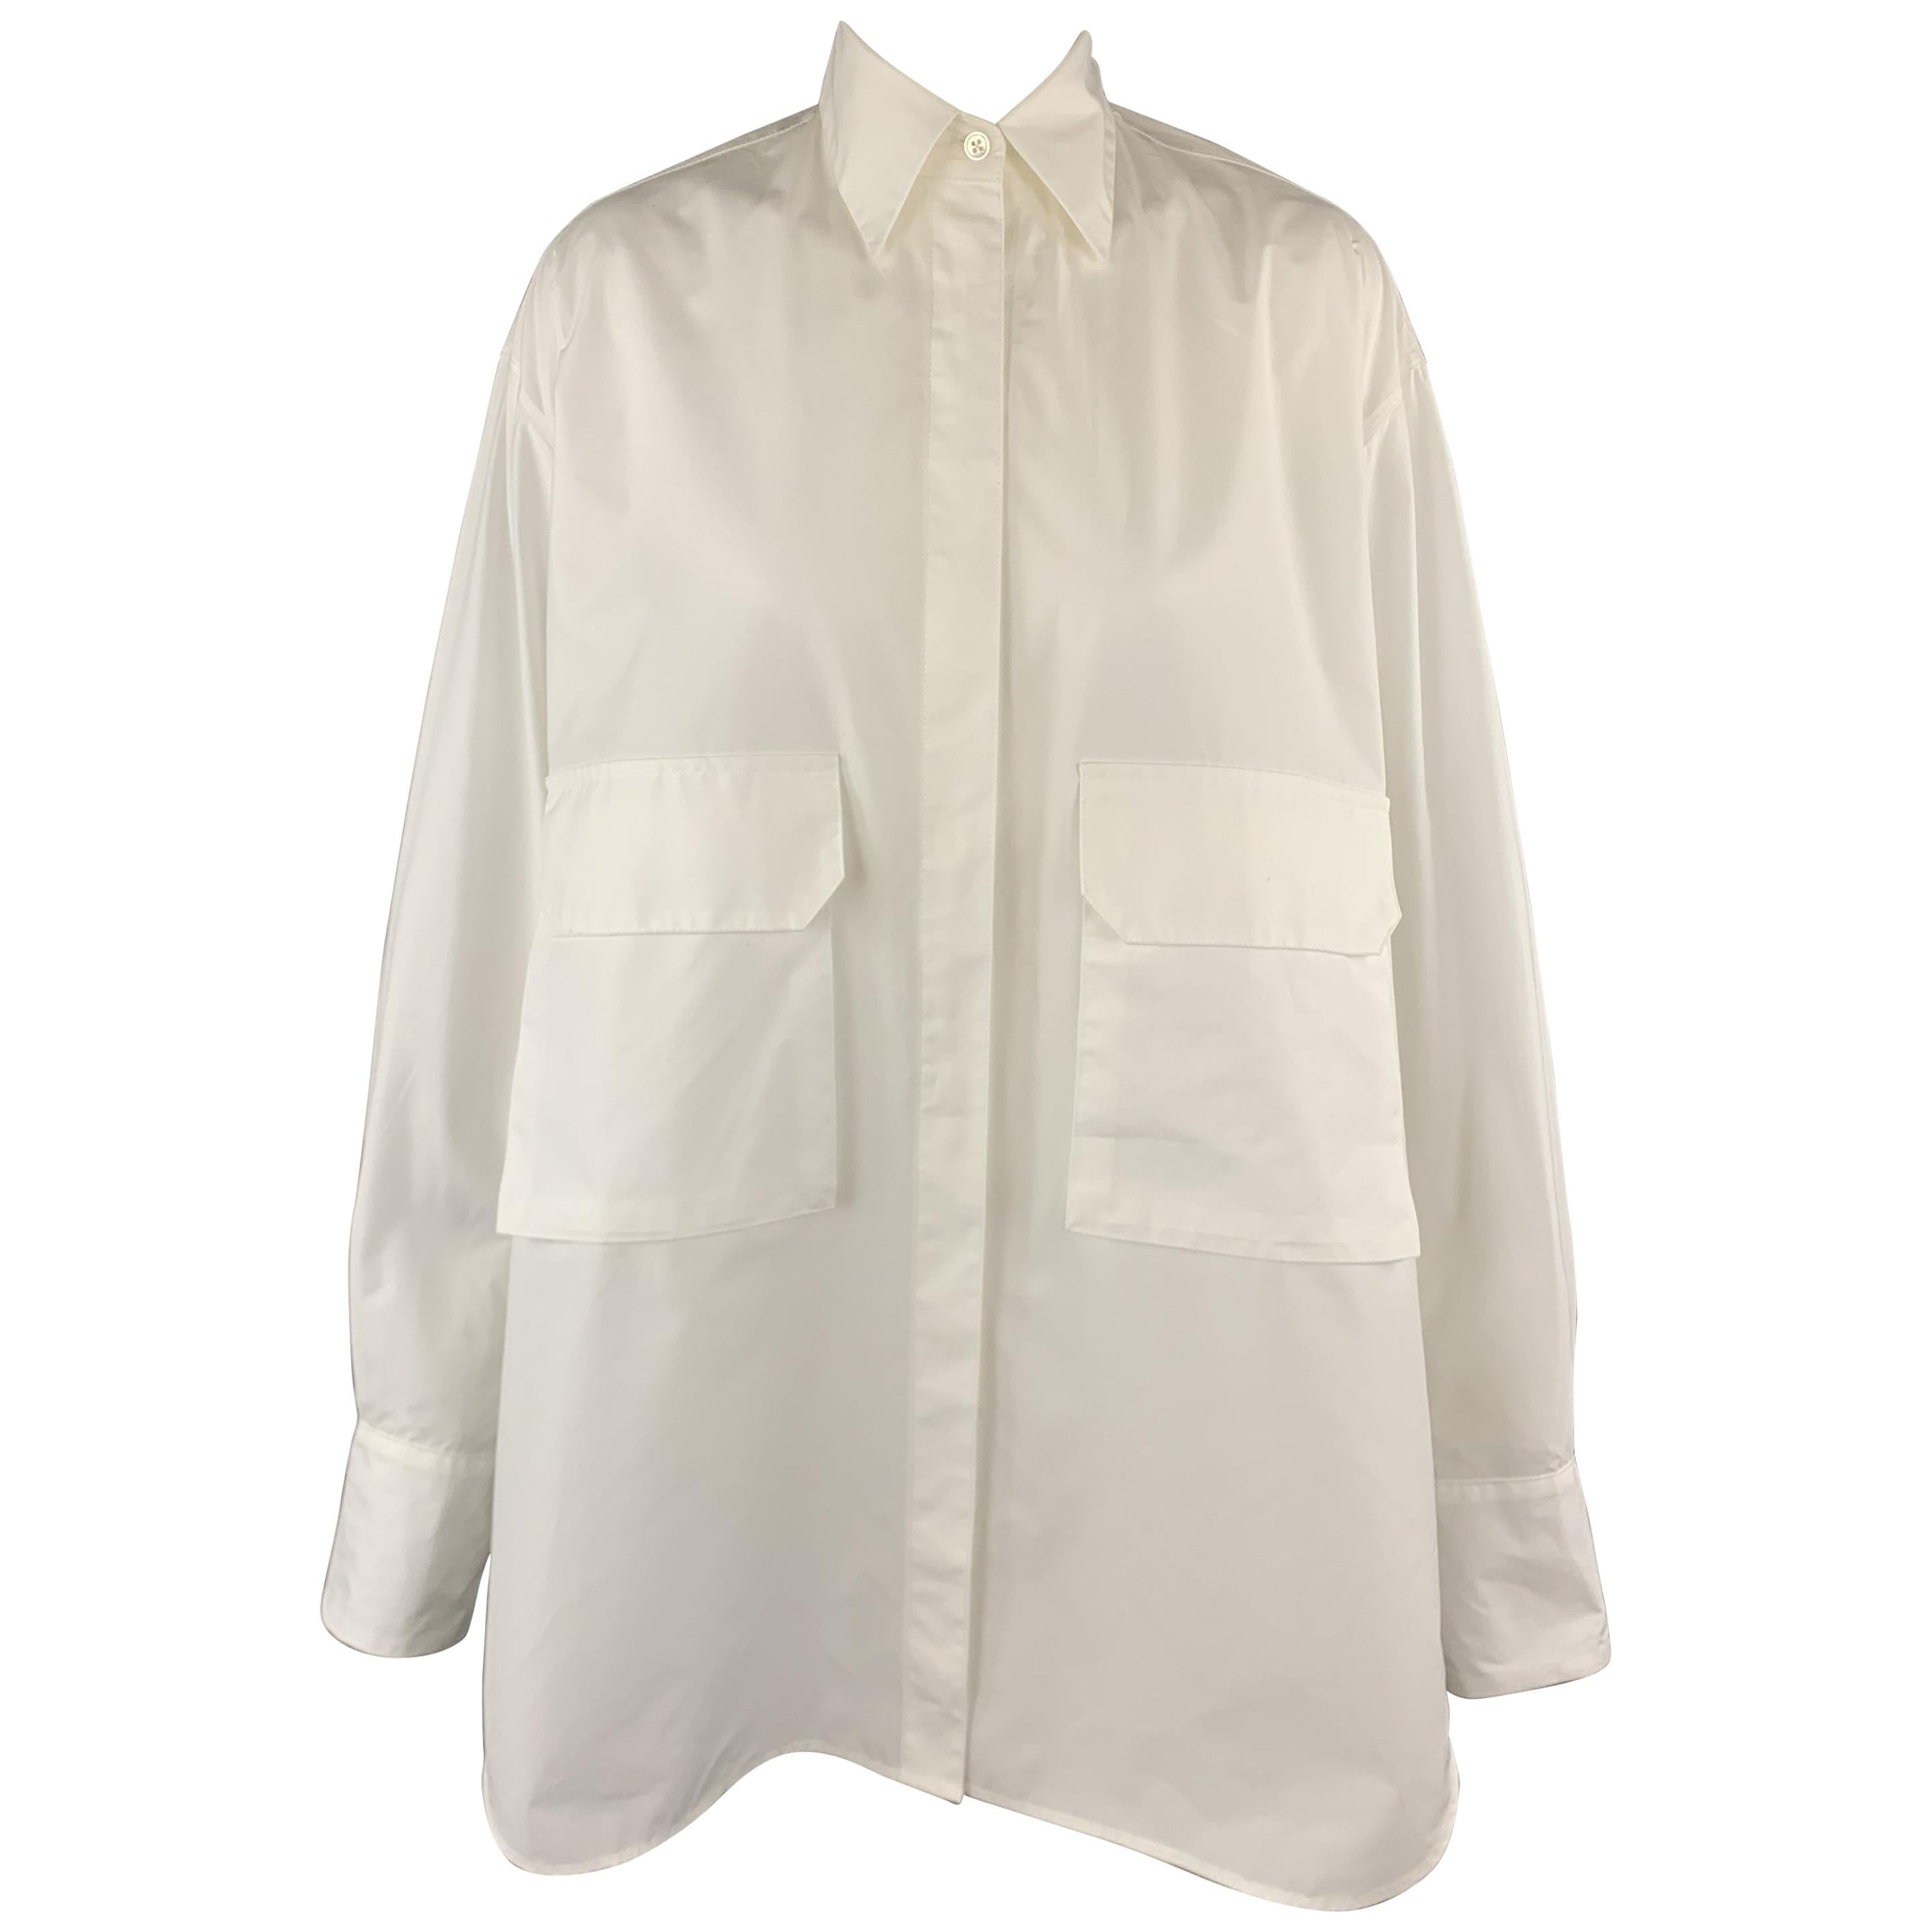 DEVEAUX New York Size 8 White Cotton MAX SHIRT Oversized Blouse